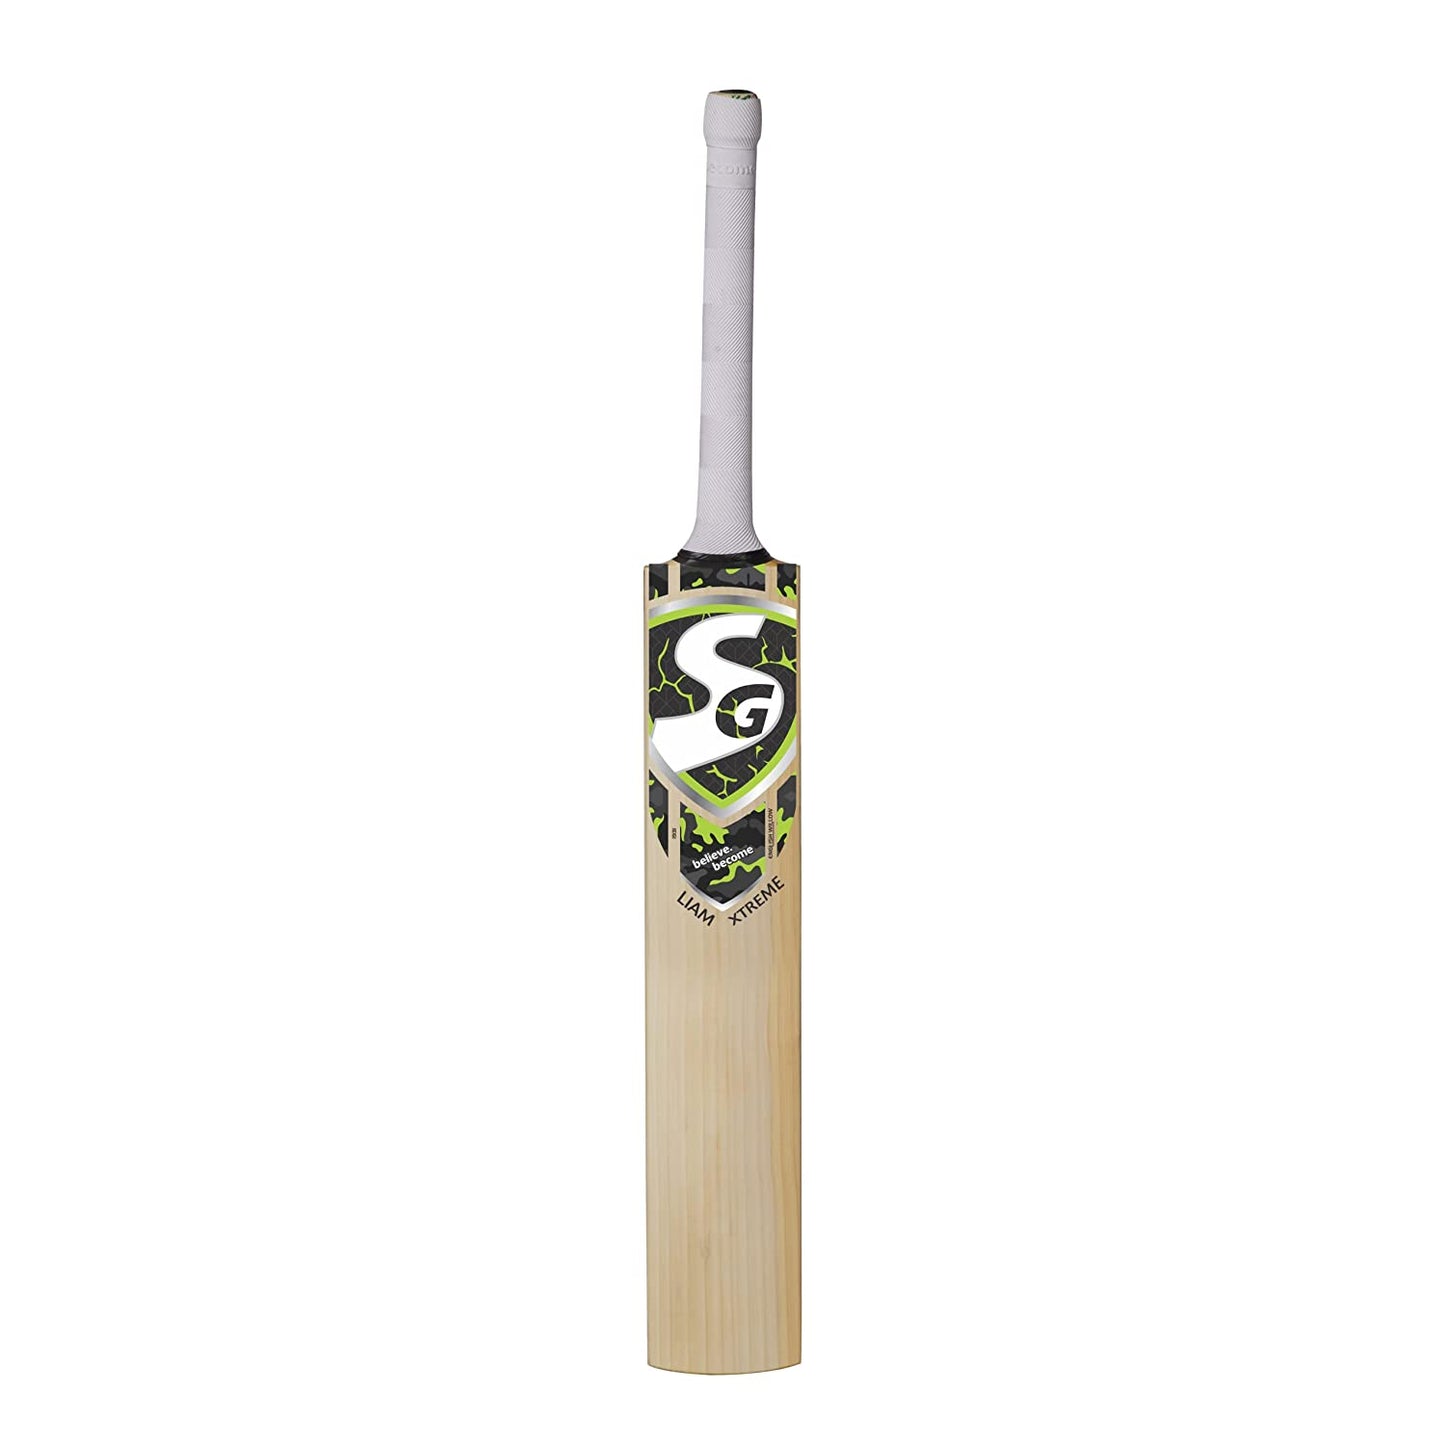 SG Liam Xtreme English Willow Cricket Bat - Best Price online Prokicksports.com